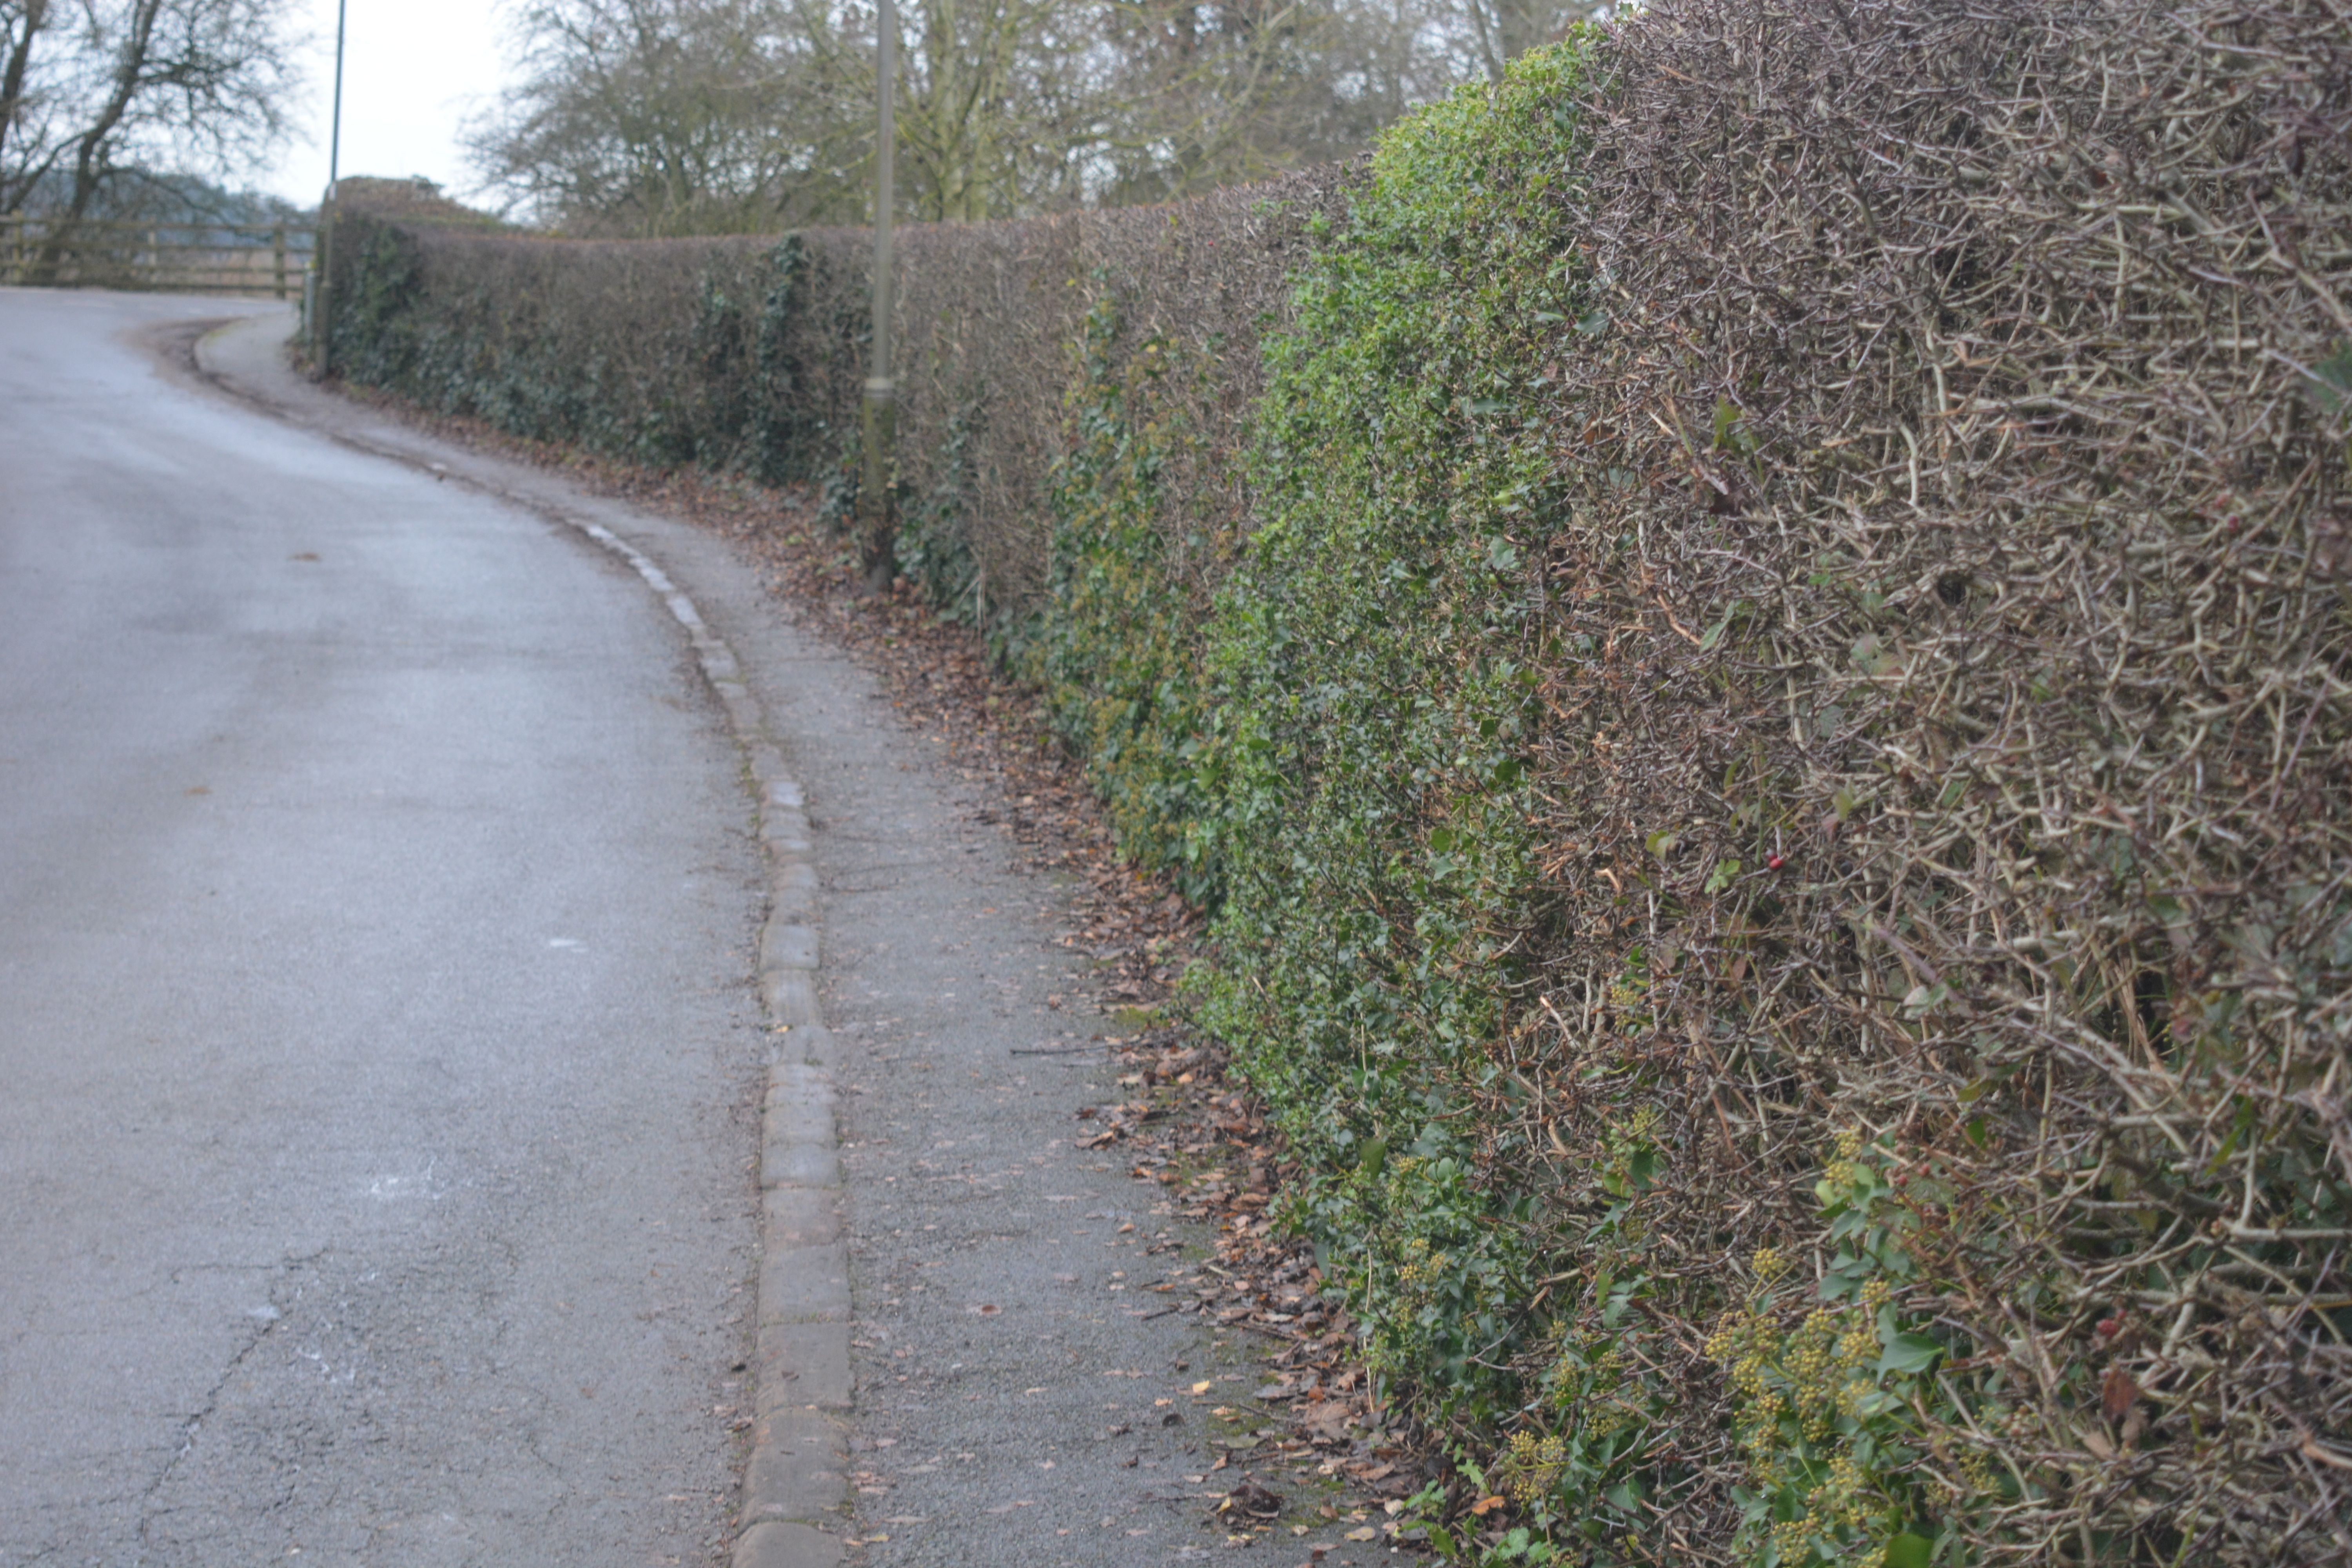 Narrow pavement from Makeney Road